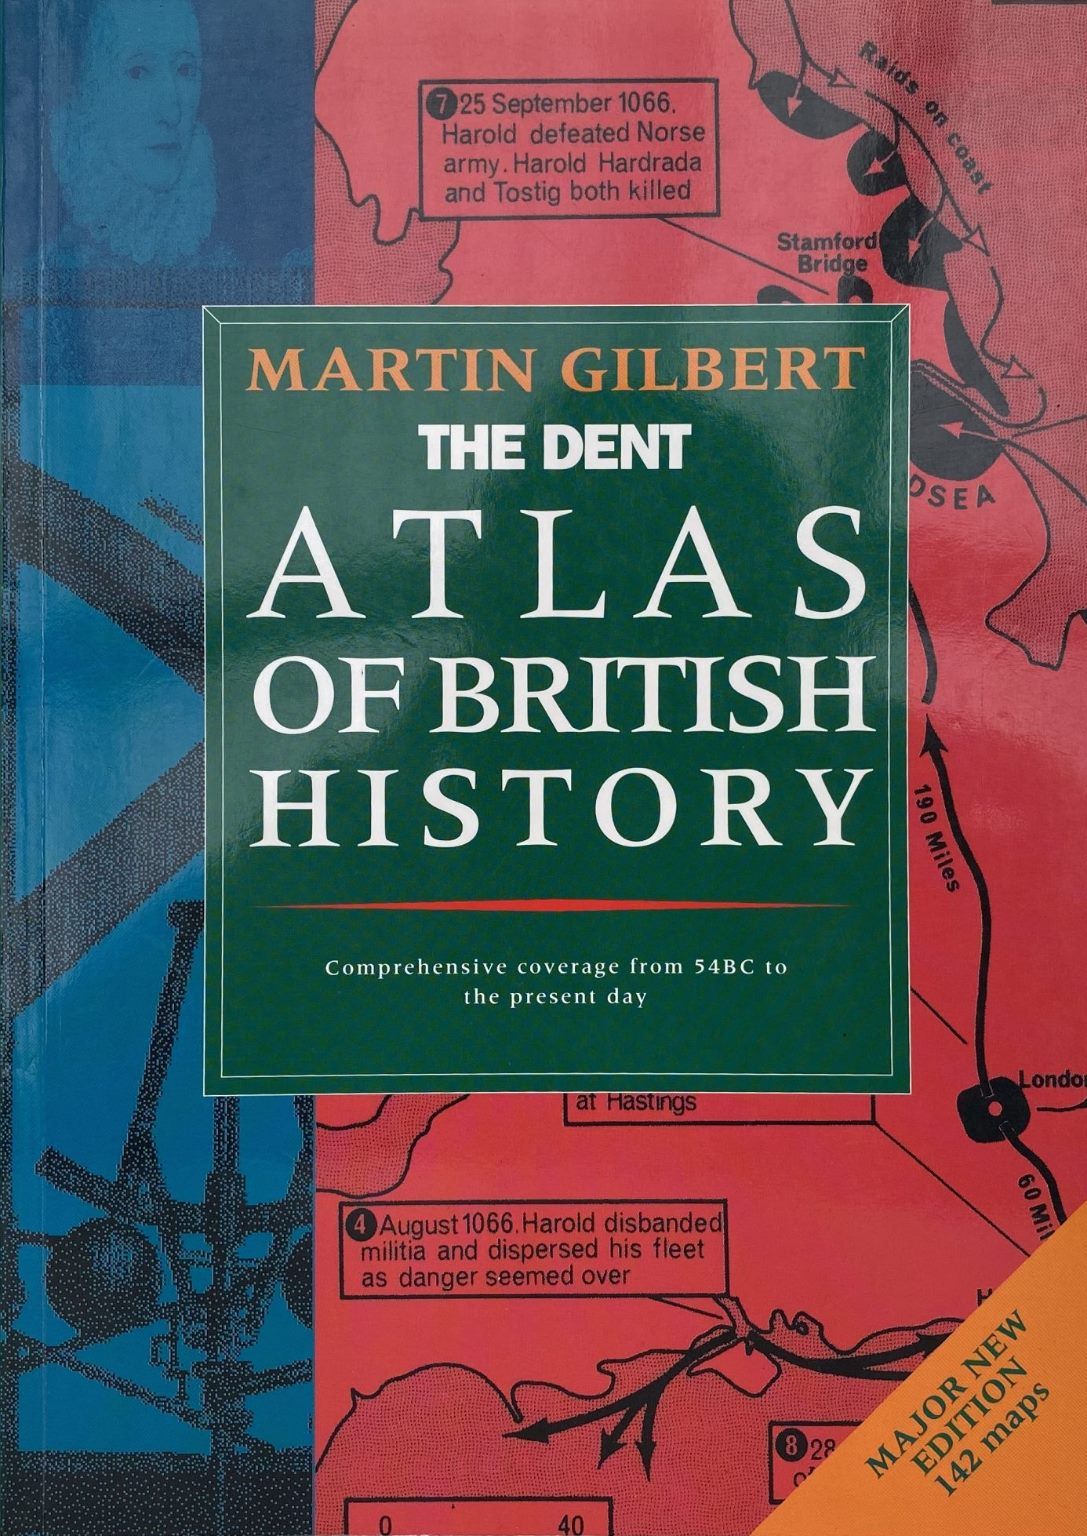 THE DENT ATLAS OF BRITISH HISTORY